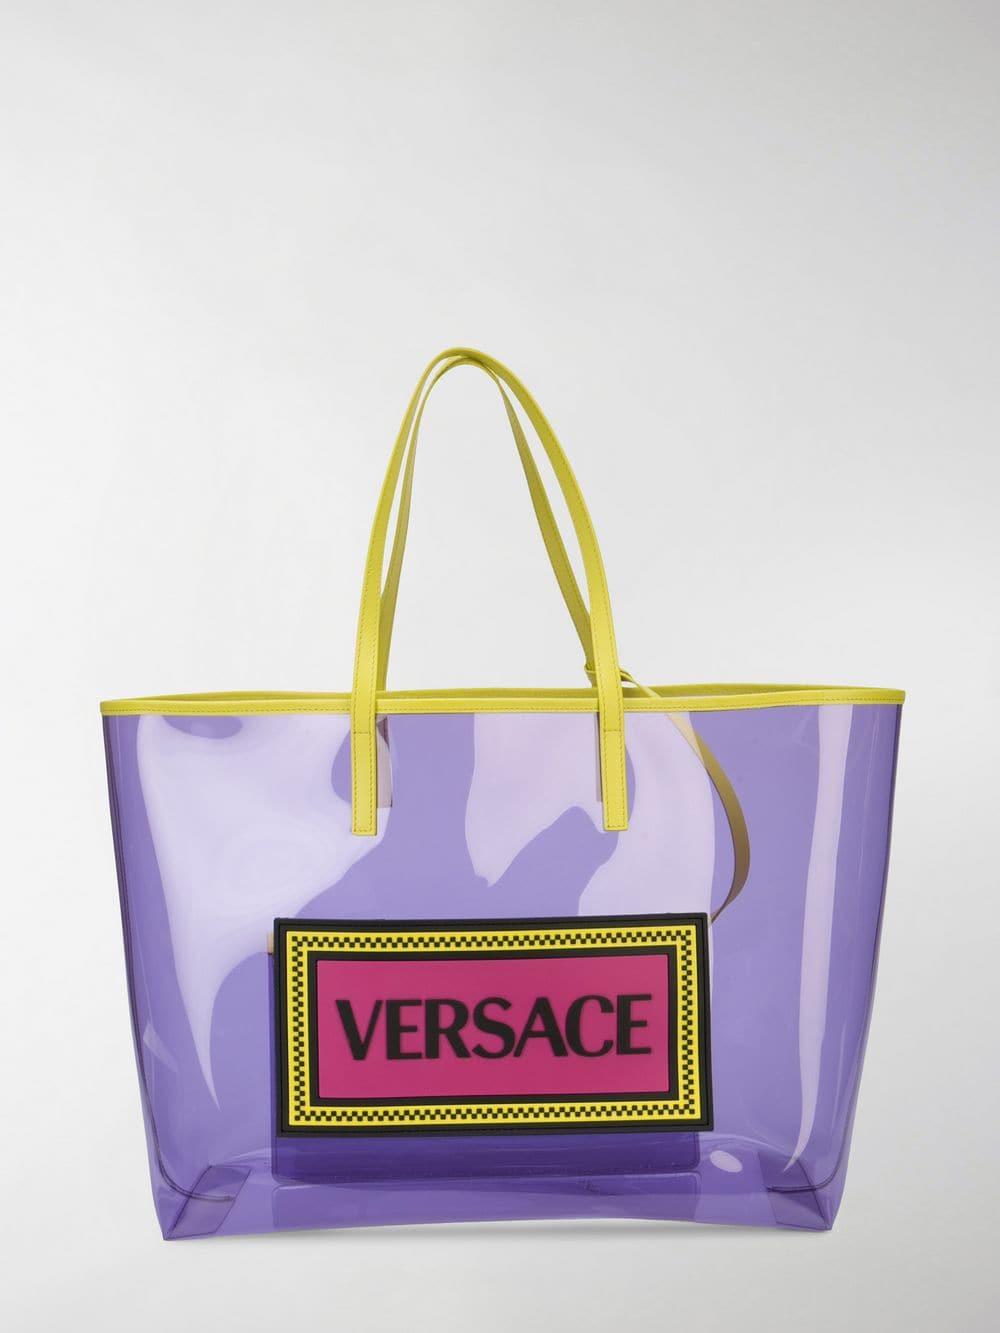 Versace Pvc Logo Shopper Tote in Purple - Lyst